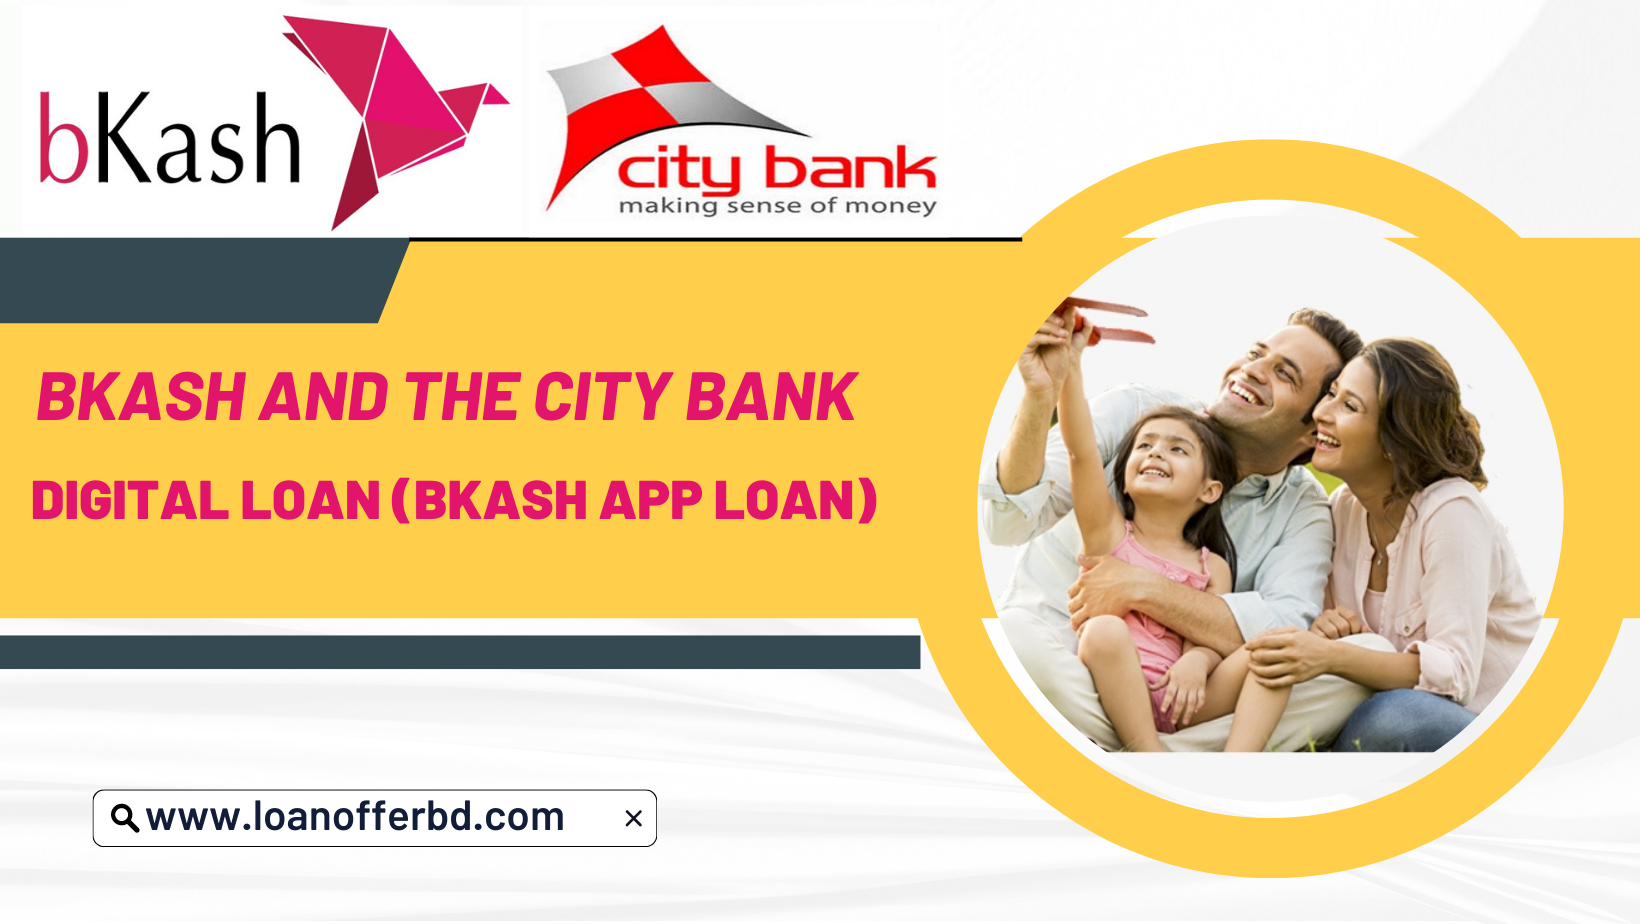 bKash-citybank-digital-loan-loanofferbd.com